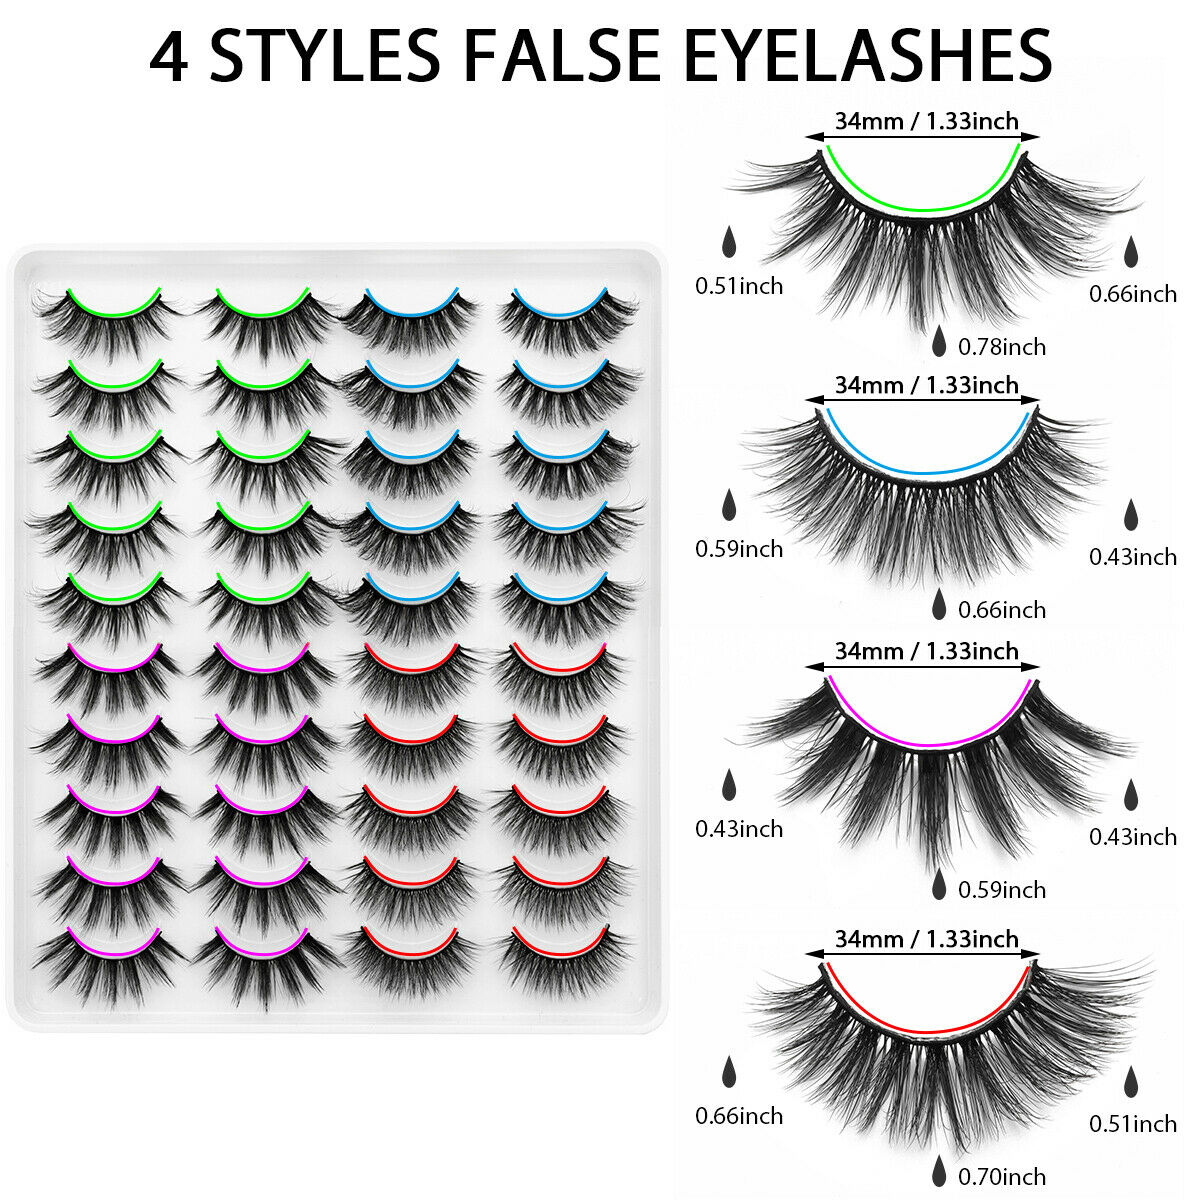 SOUMNS SPORTS Eye Makeup Handmade Natural Wispy Flared 3D Faux Mink Hair Crisscross False Eyelashes Lash Extension